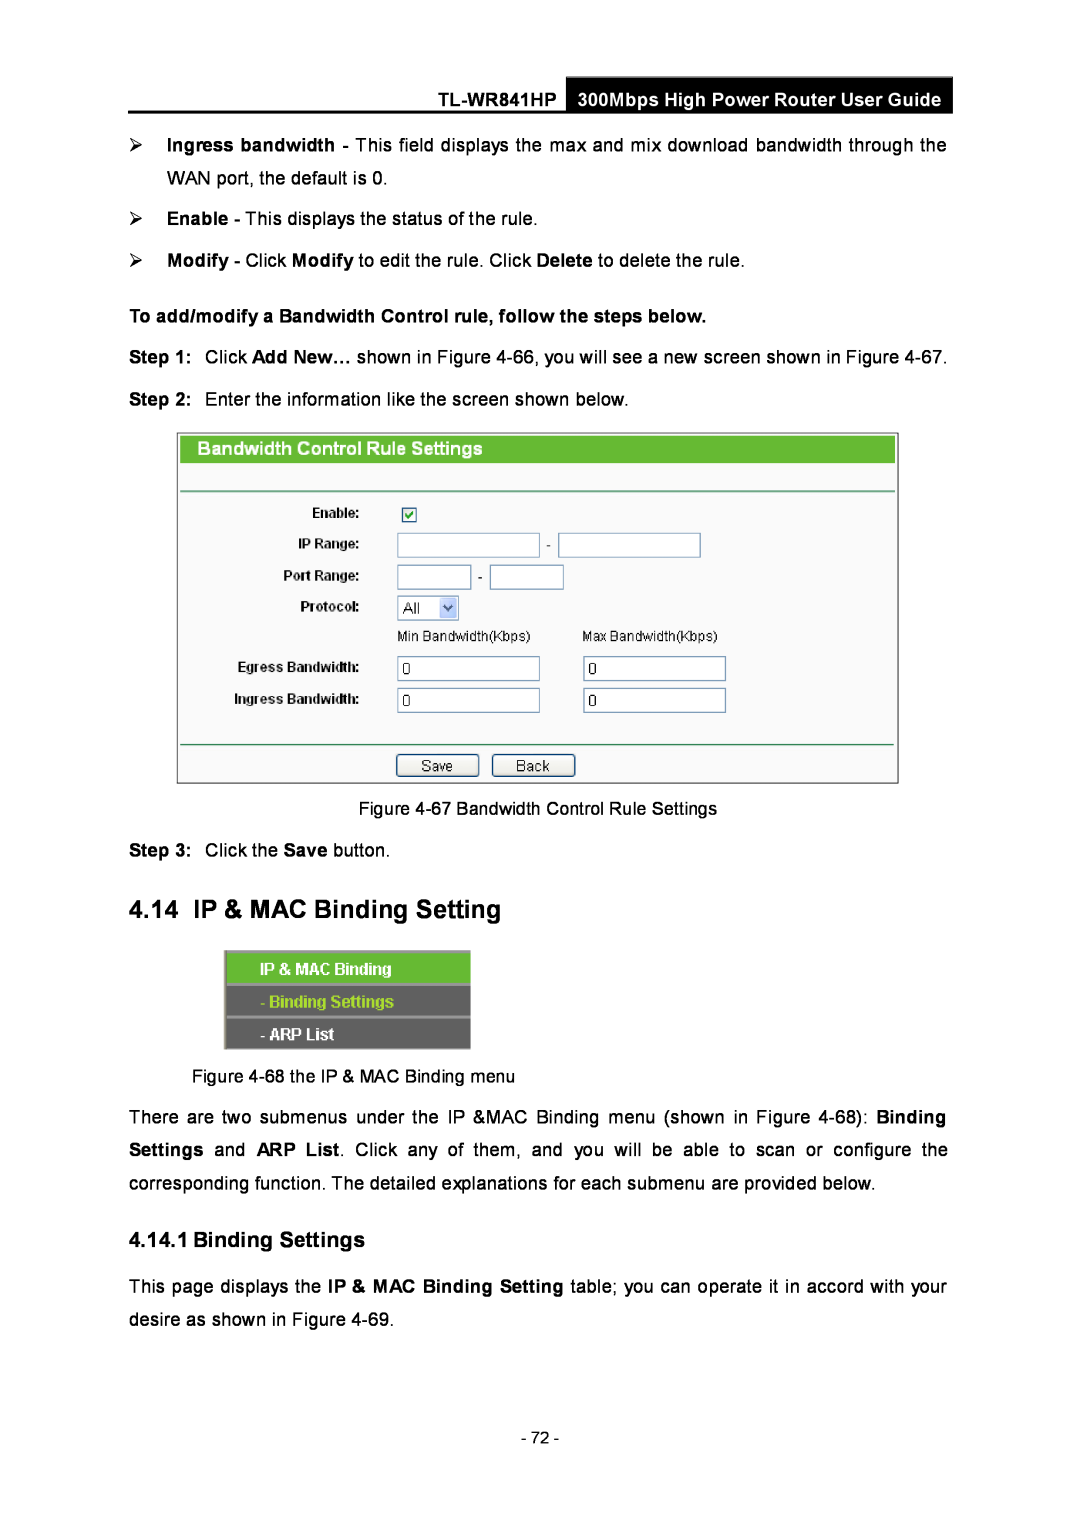 TP-Link Rev 1.0.0 1910010810 manual 4.14 IP & MAC Binding Setting, Binding Settings 